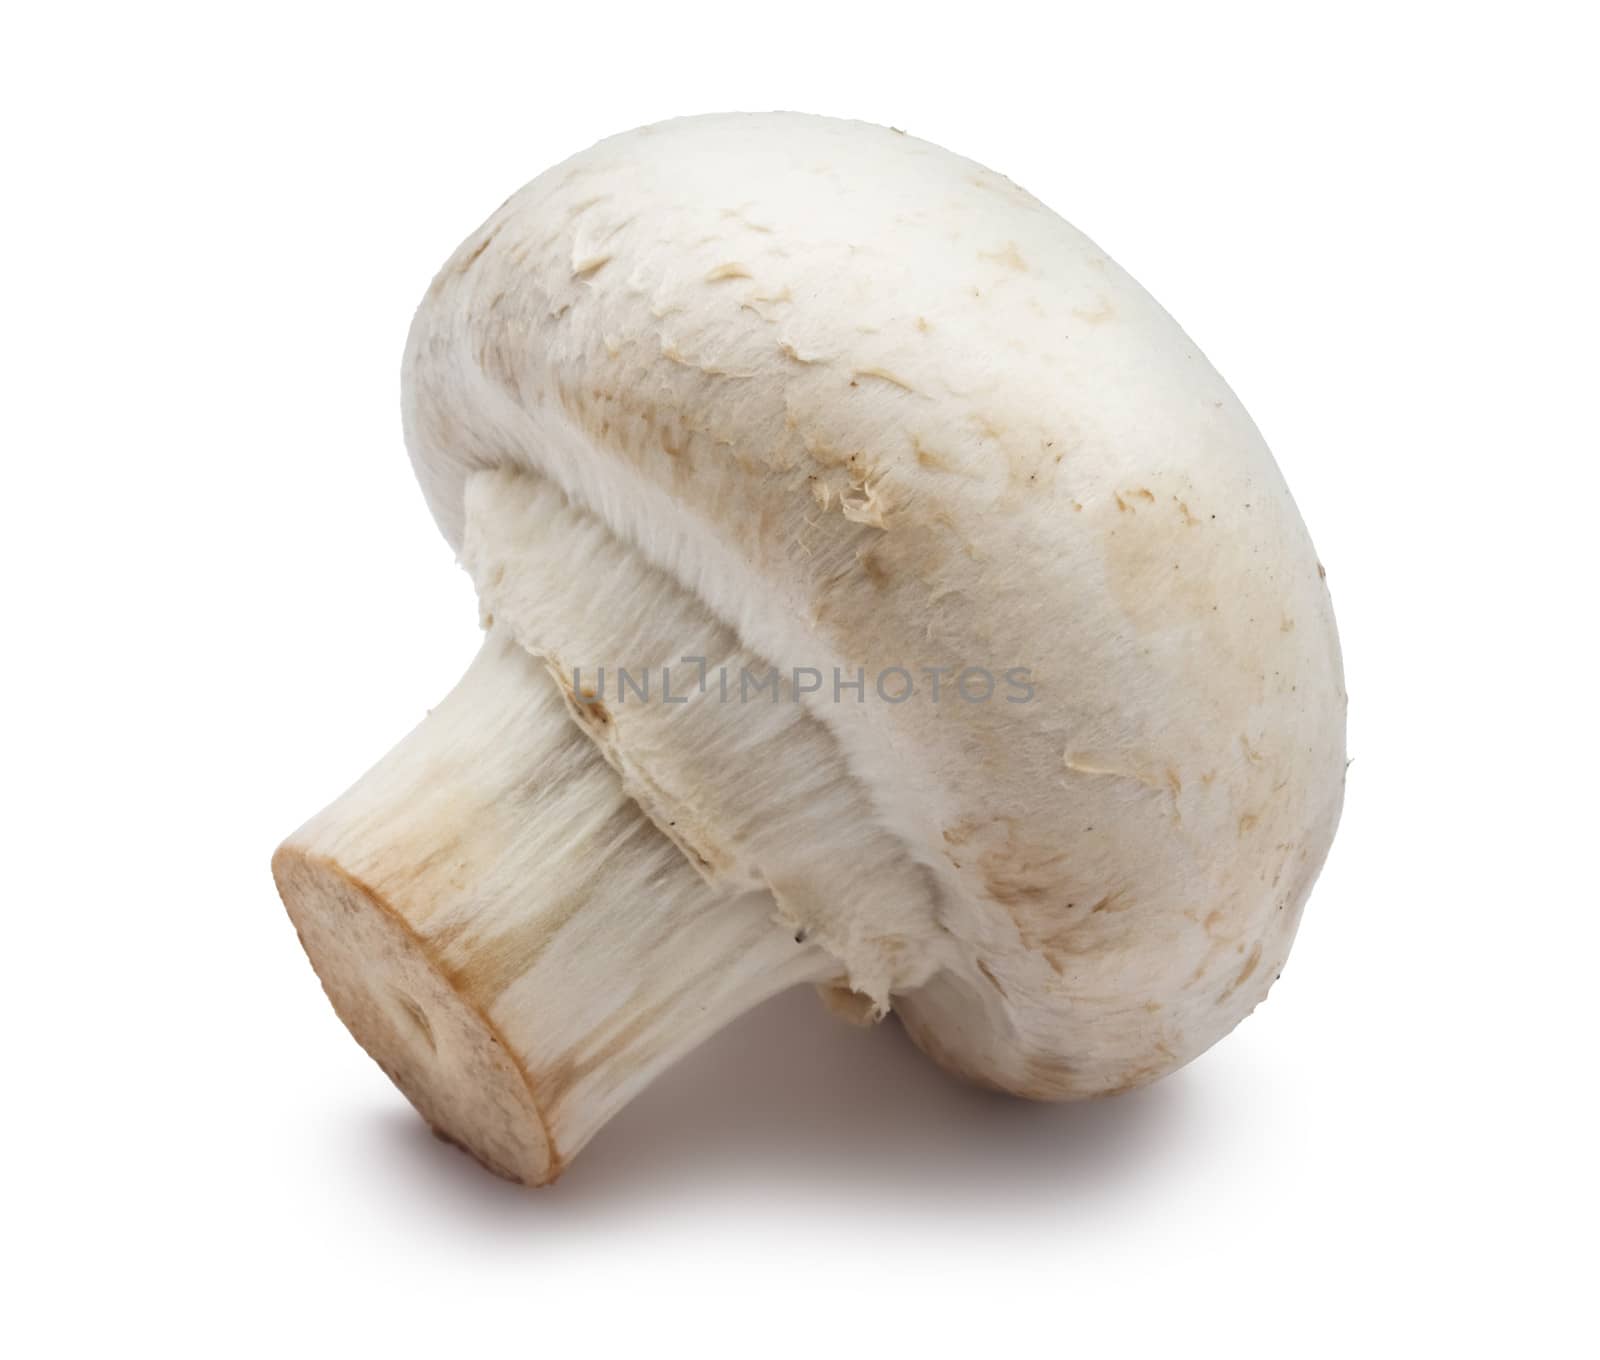 Fresh champignon mushroom isolated on white background